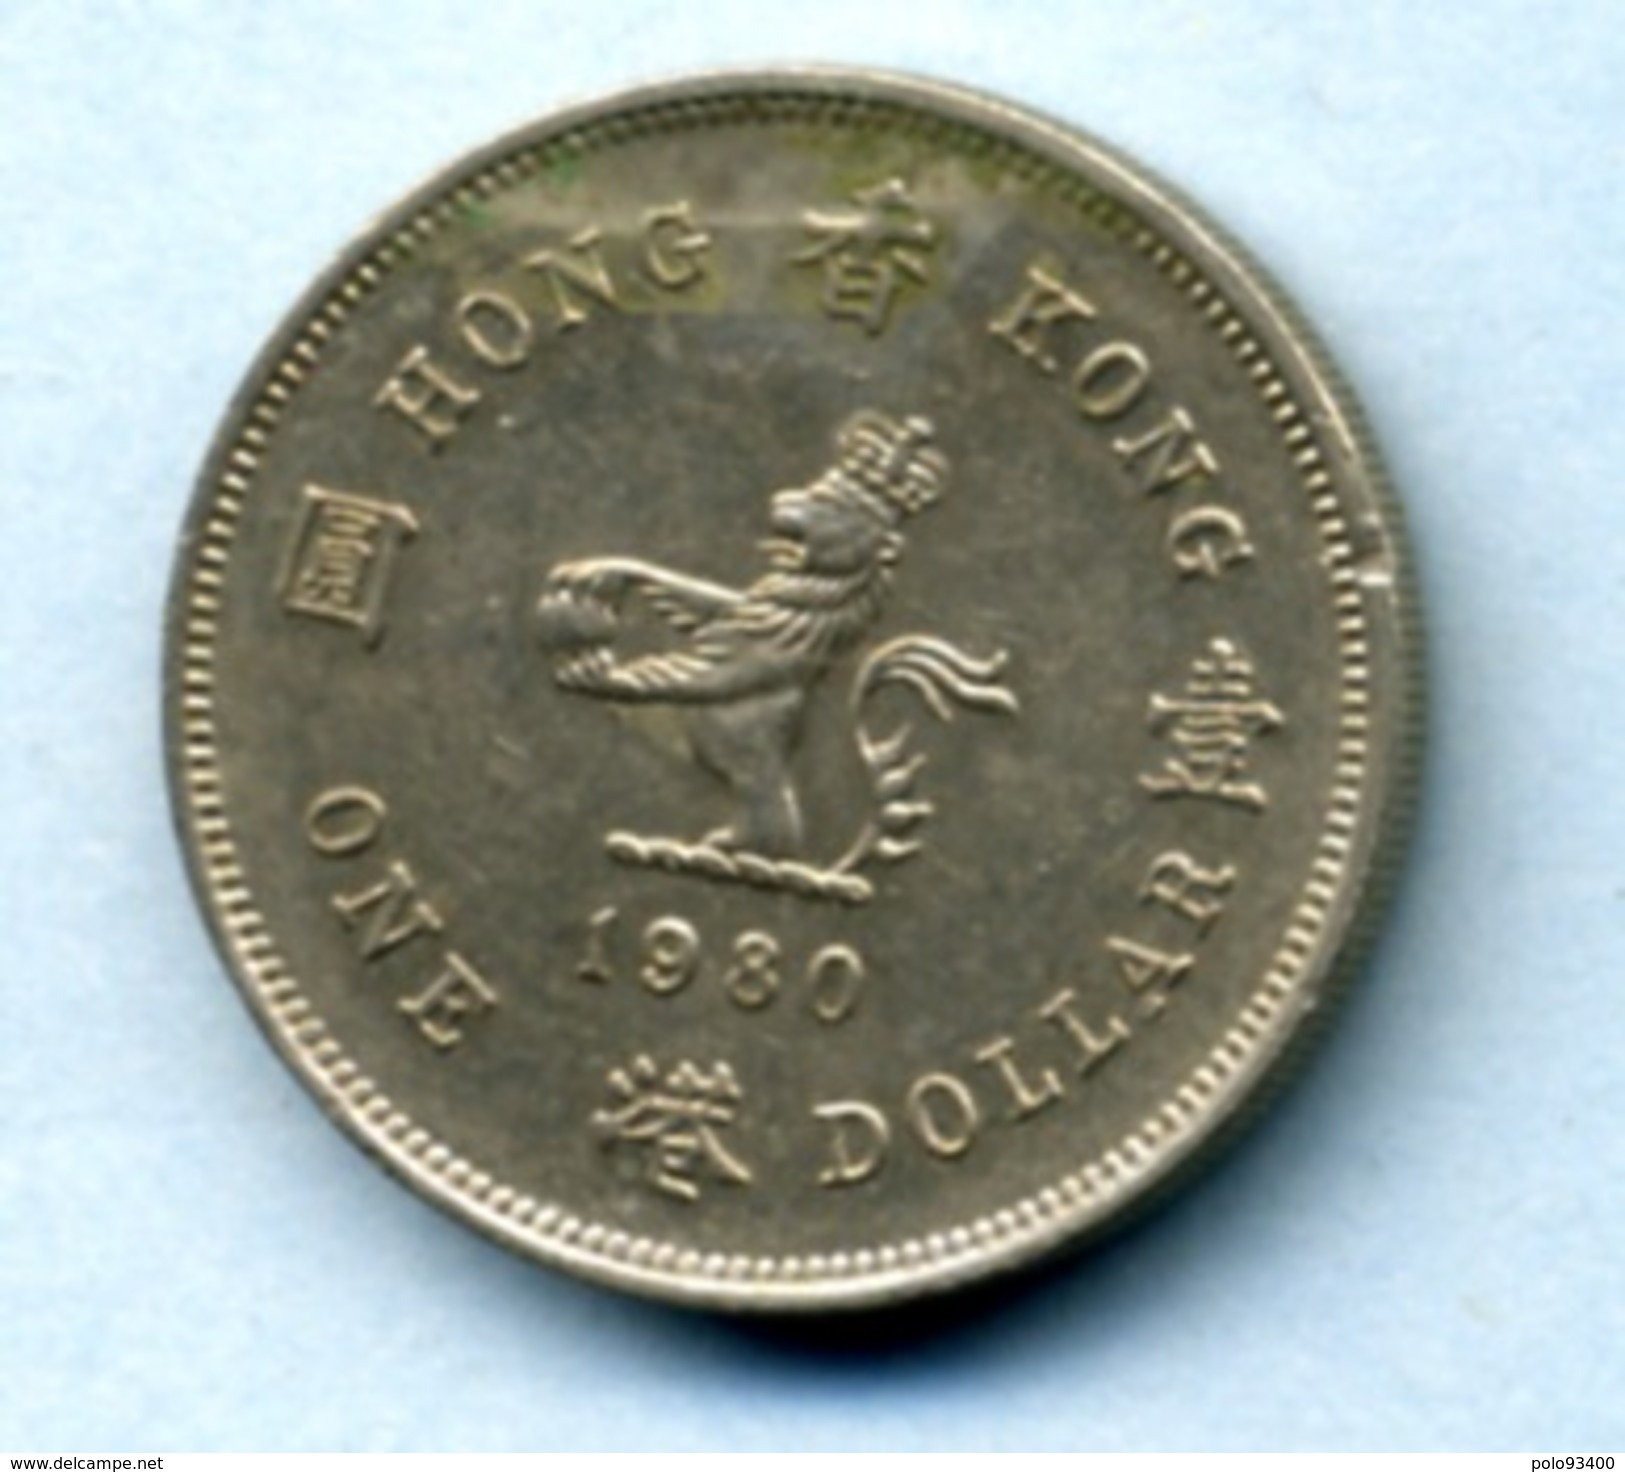 1980 1 DOLLAR - Hong Kong